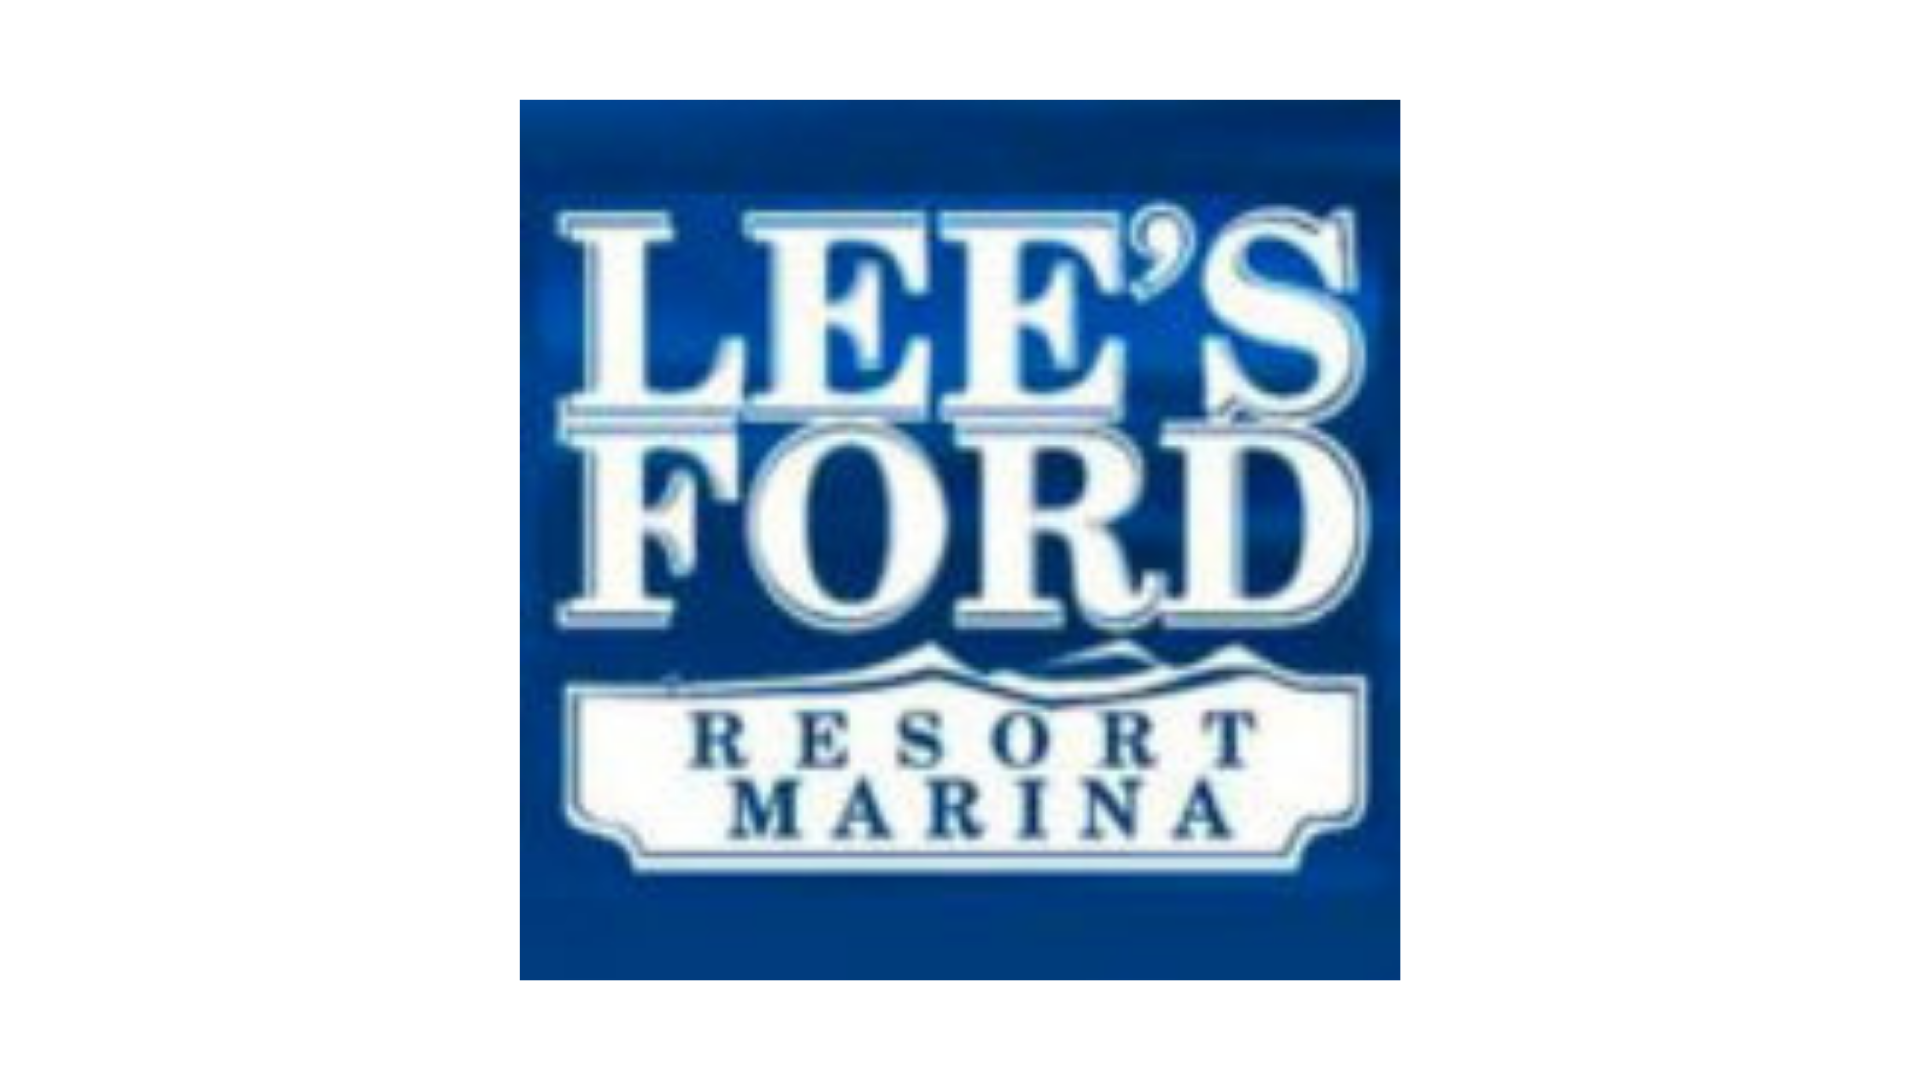 Lee's Ford Marina & Resort - Somerset-Pulaski Chamber of Commerce